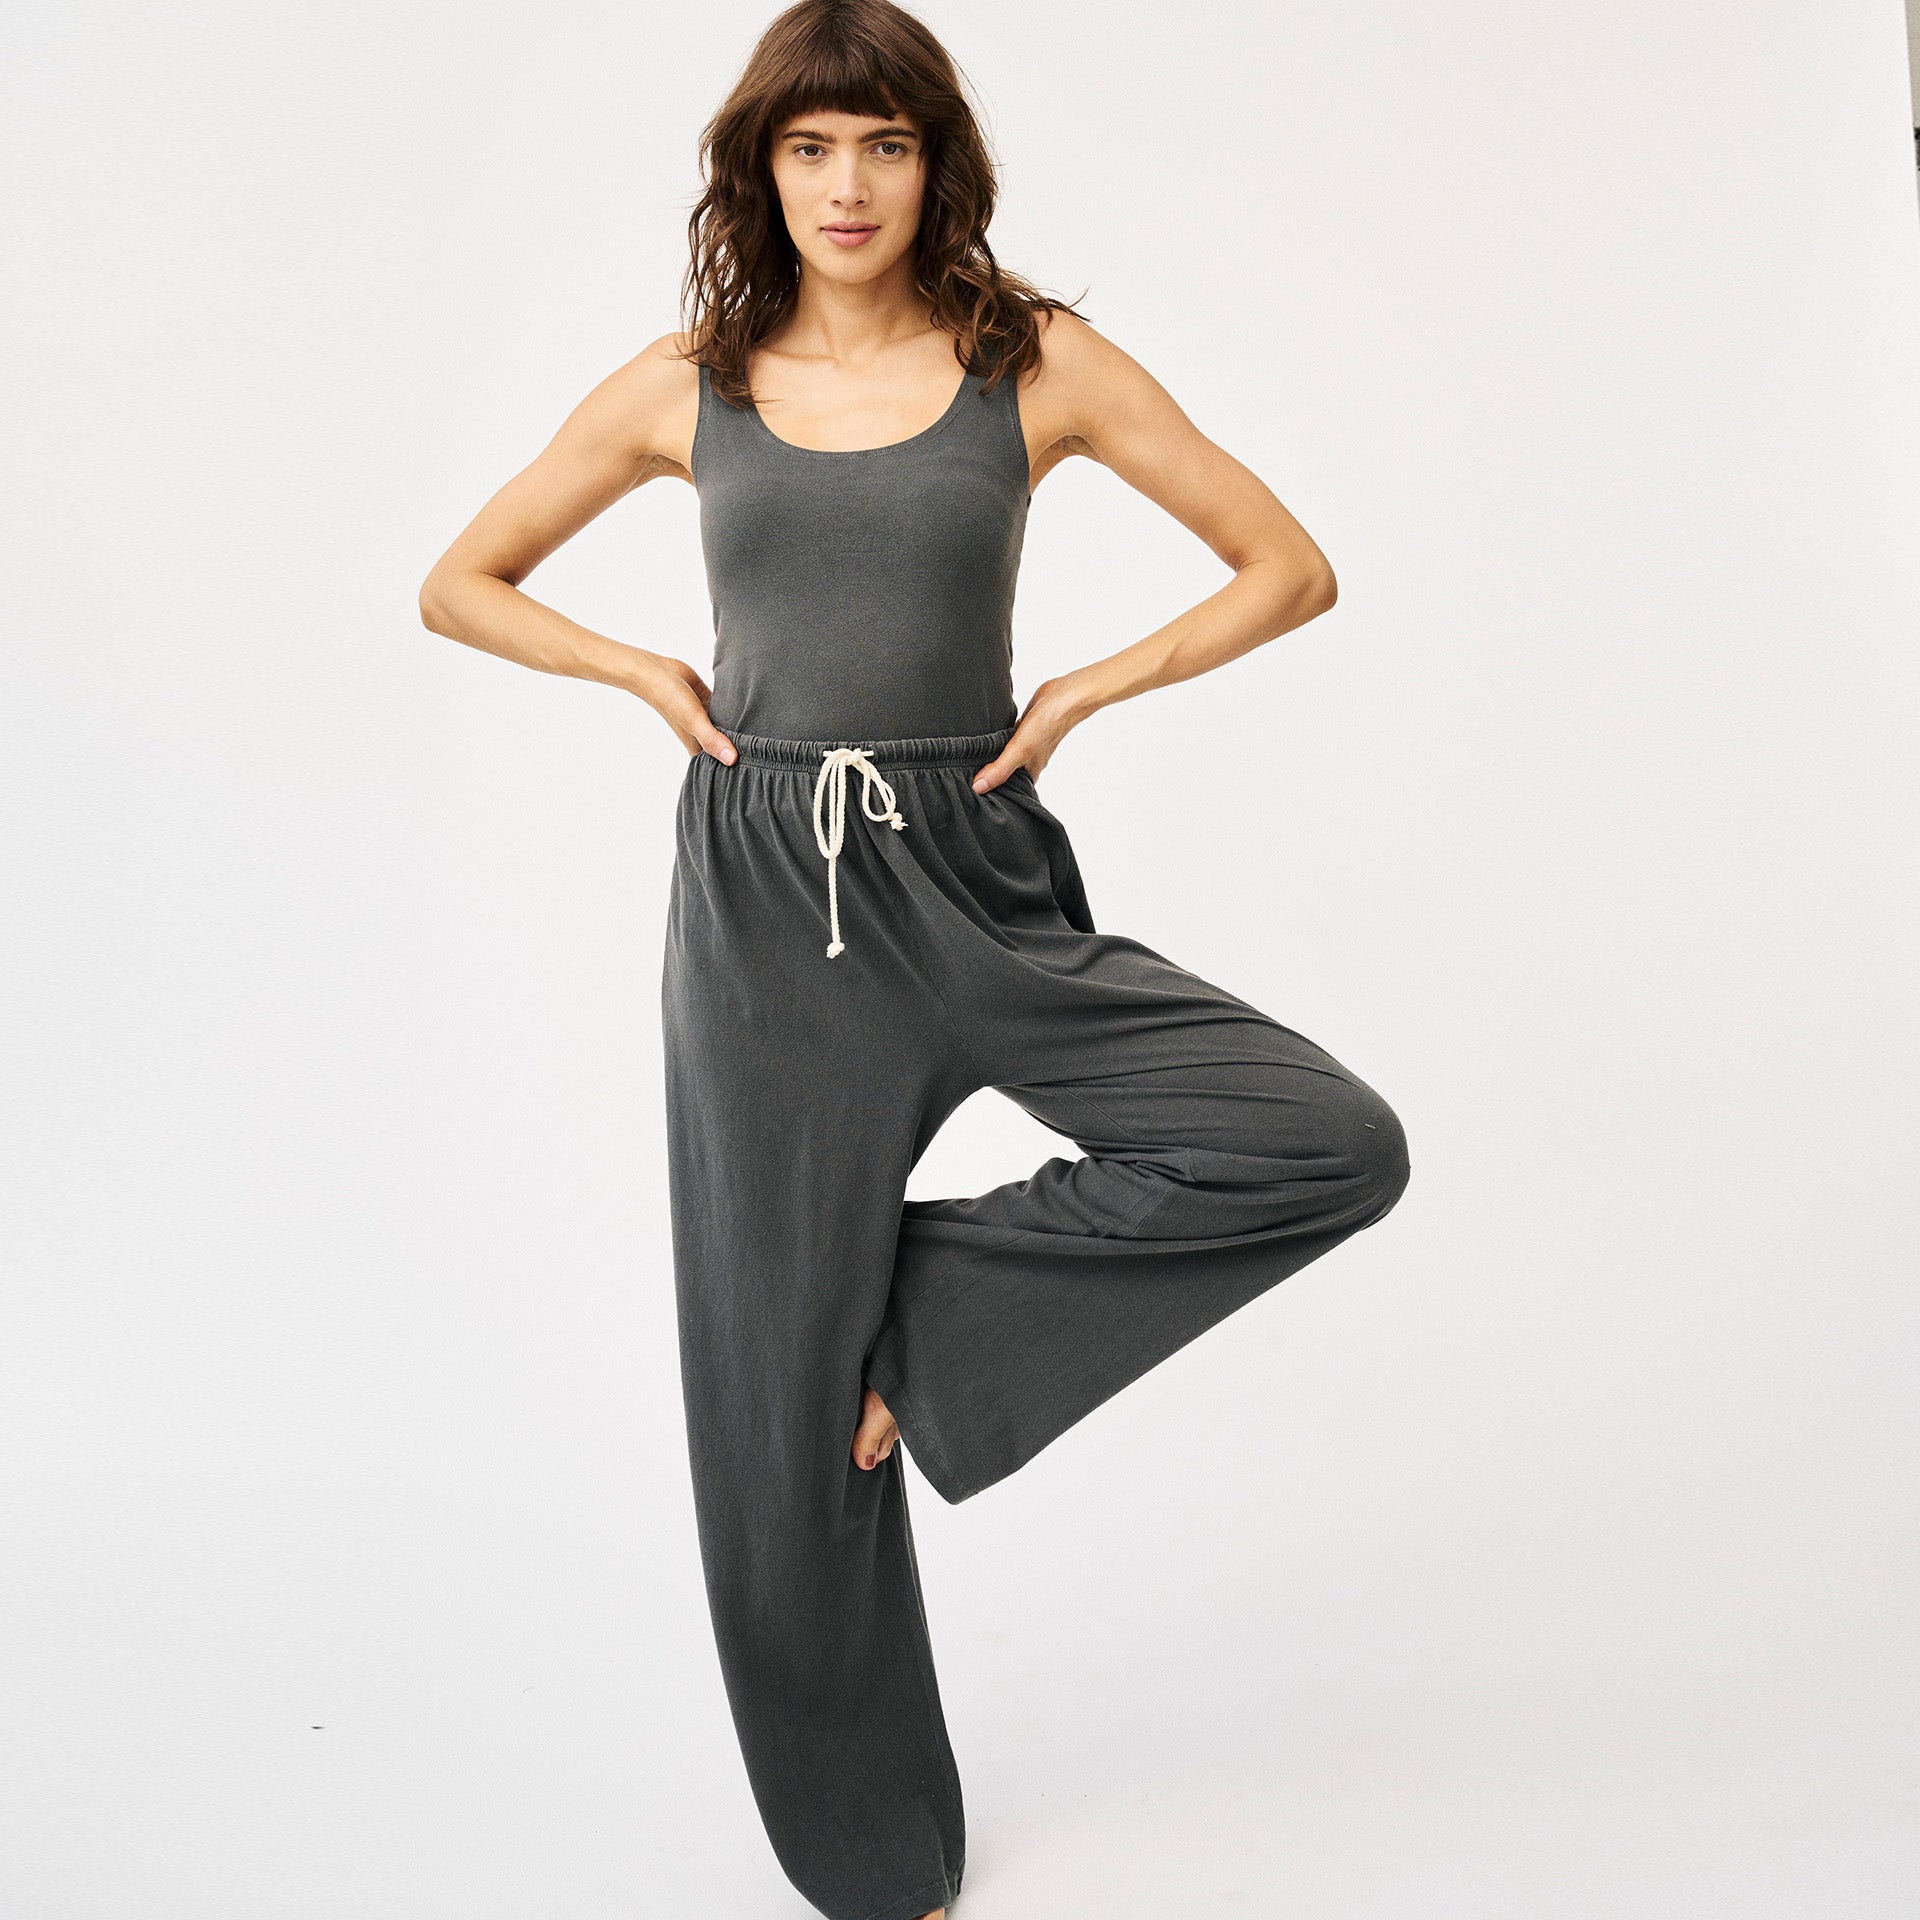 Buy Hemp Yoga Capris // Easy to Slip on // Great Yoga Pants